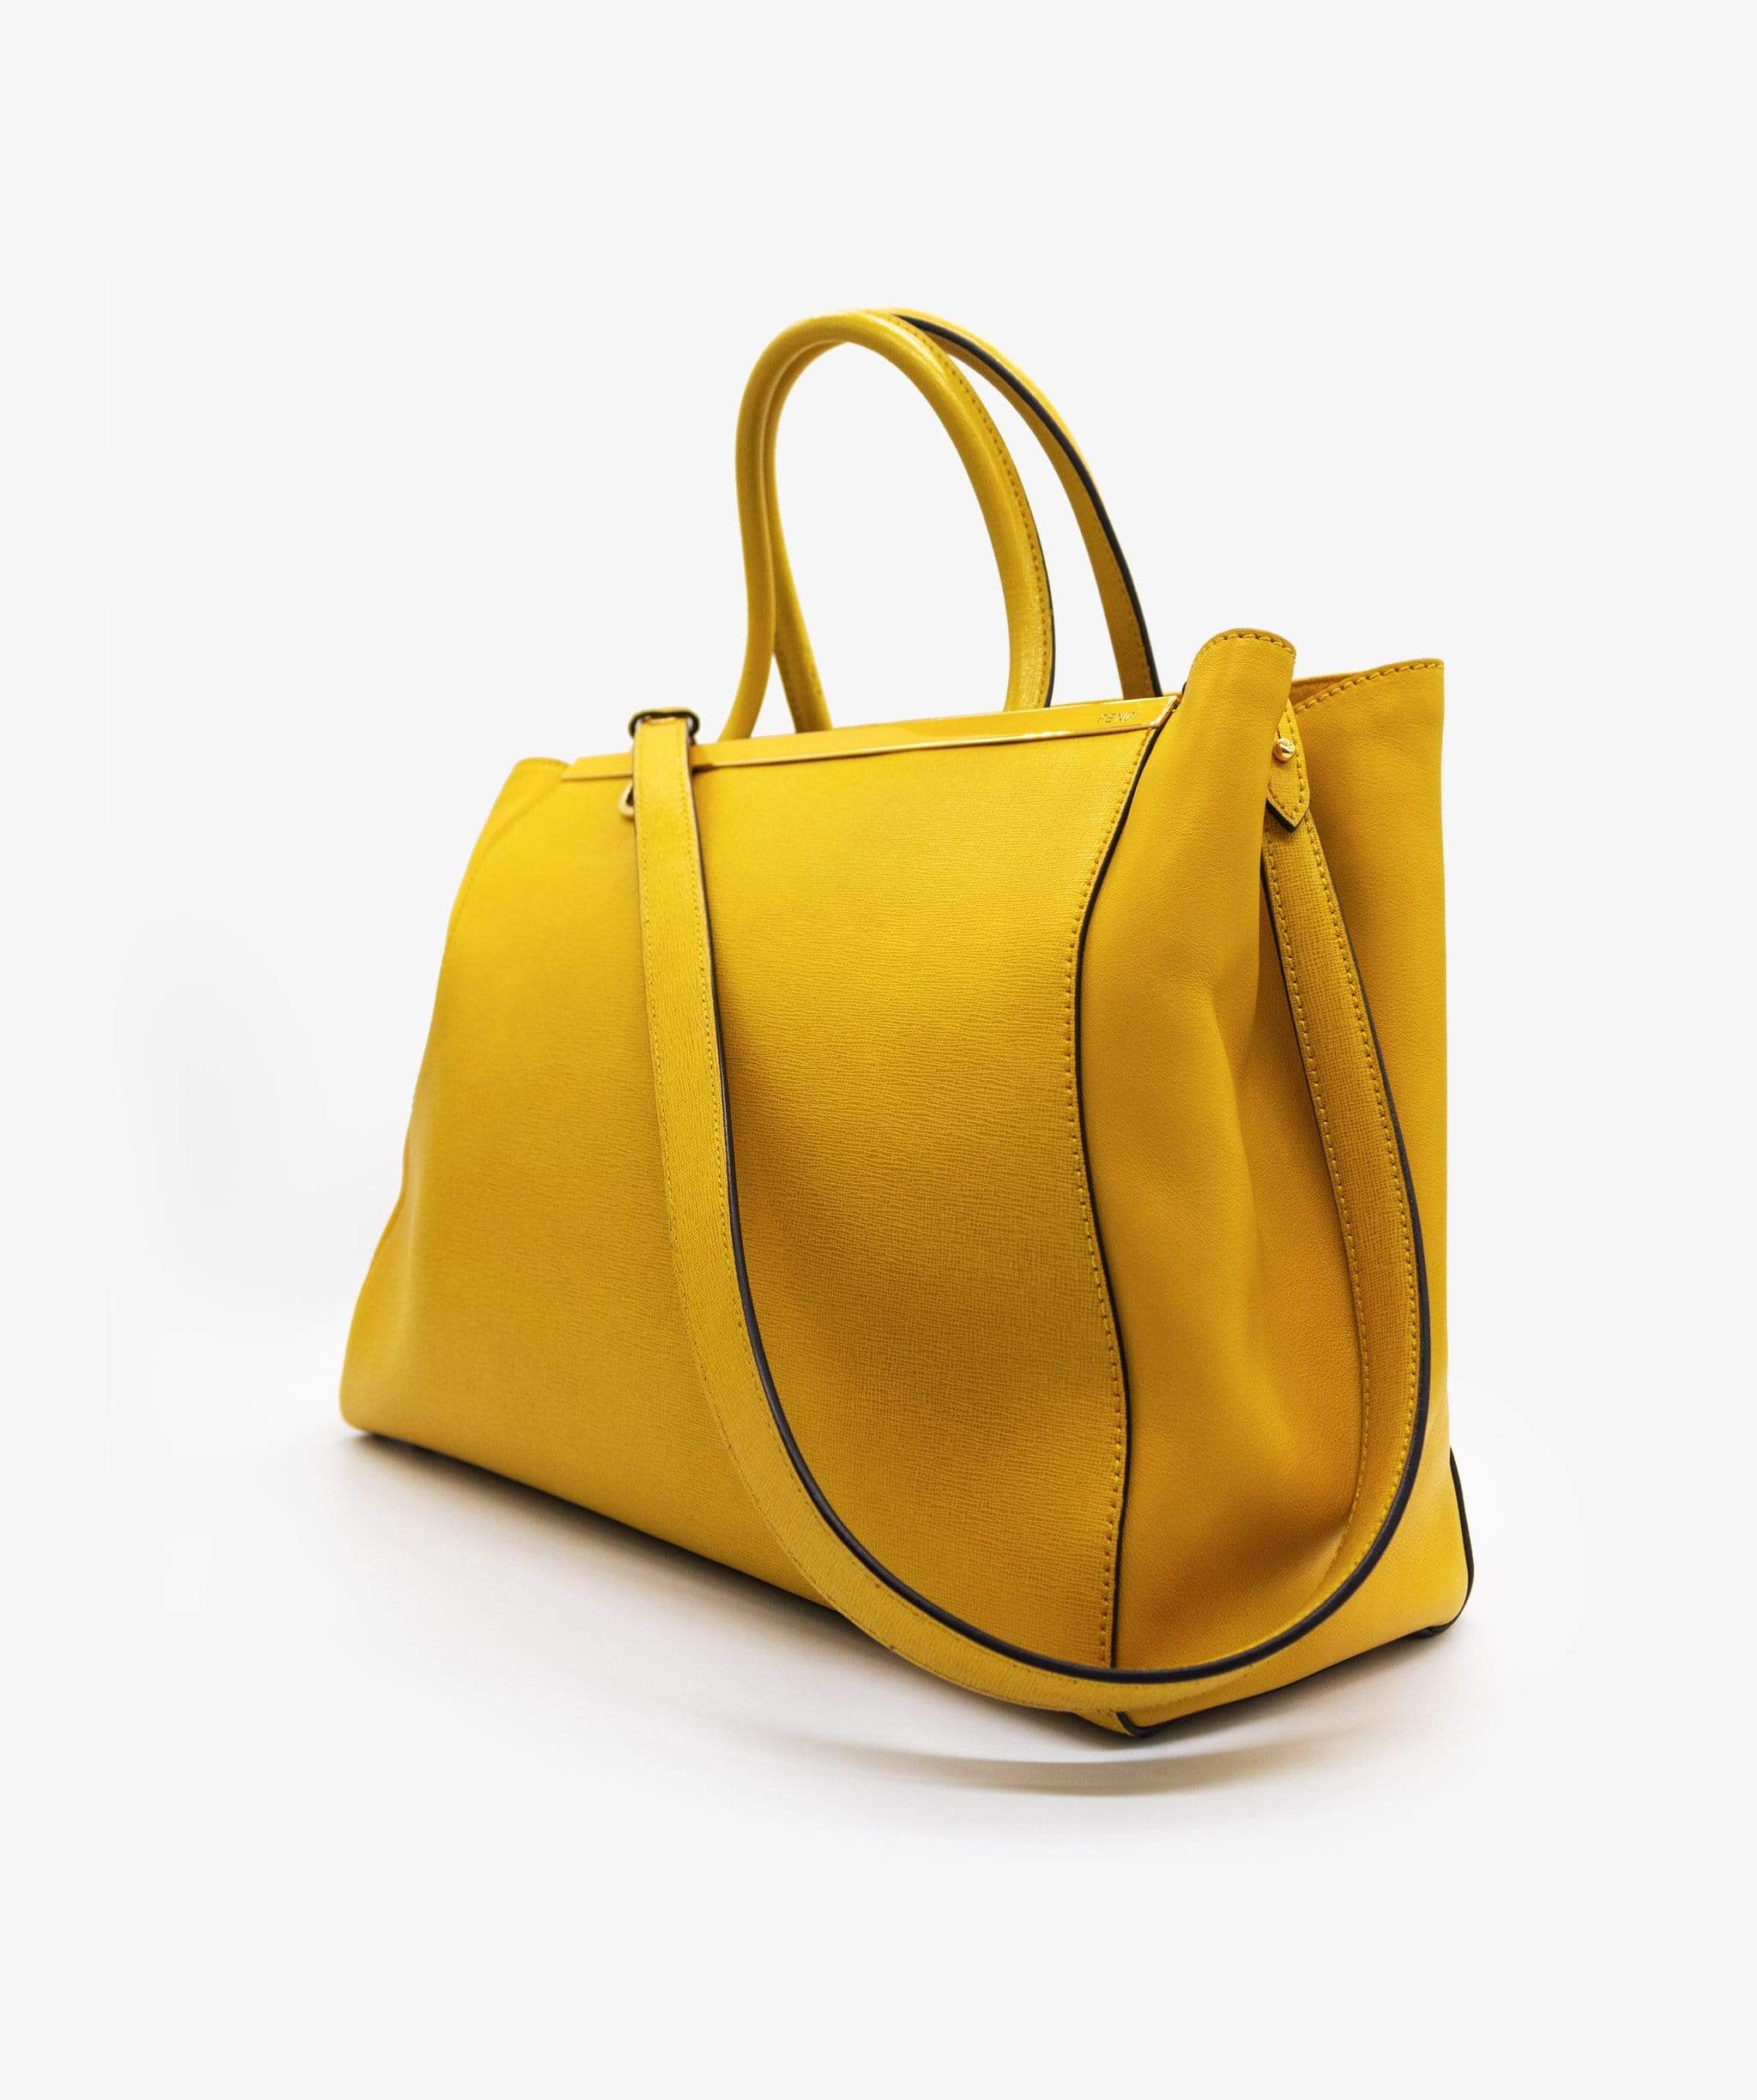 Fendi Fendi Sac Du Jour Yellow Handbag RJL1261